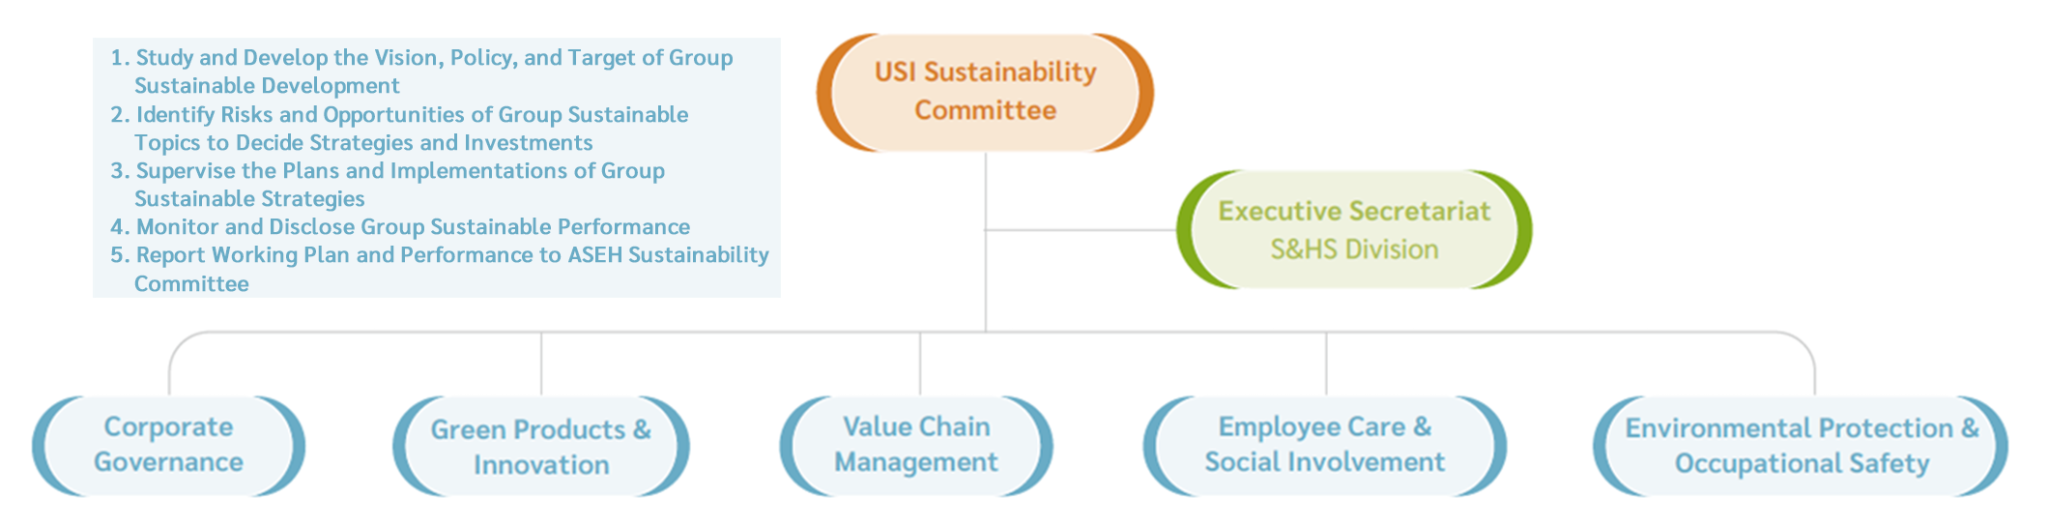 USI Sustainability Committee